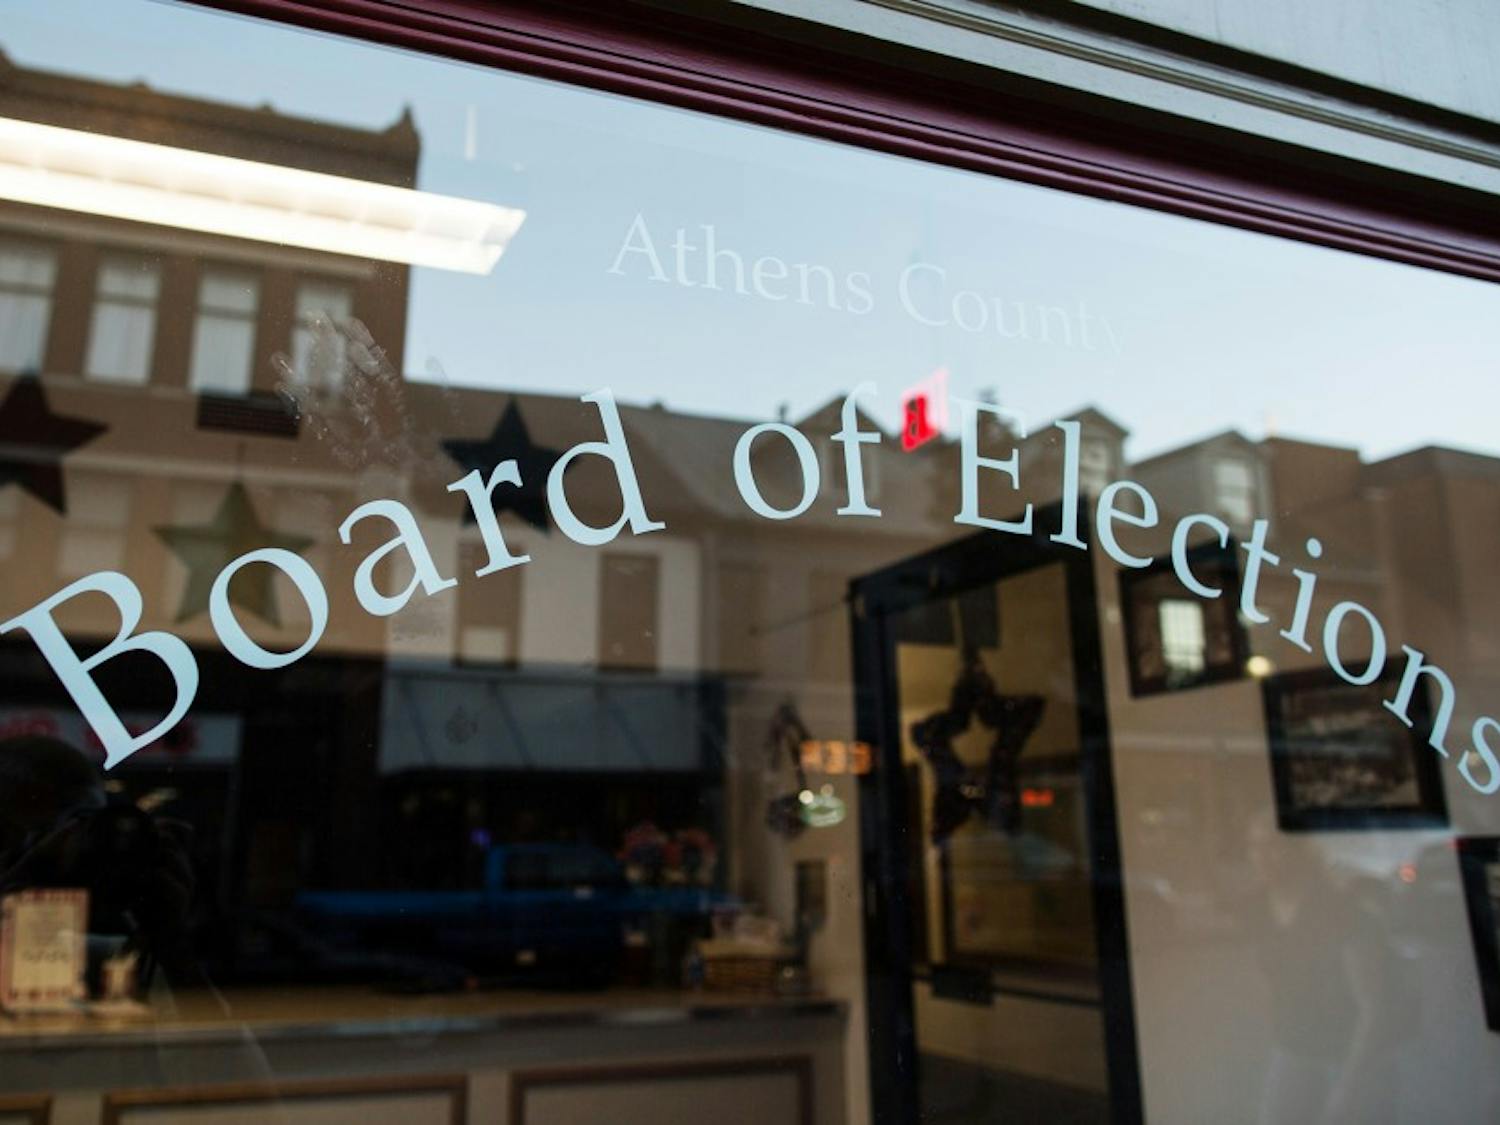 Board of Elections window